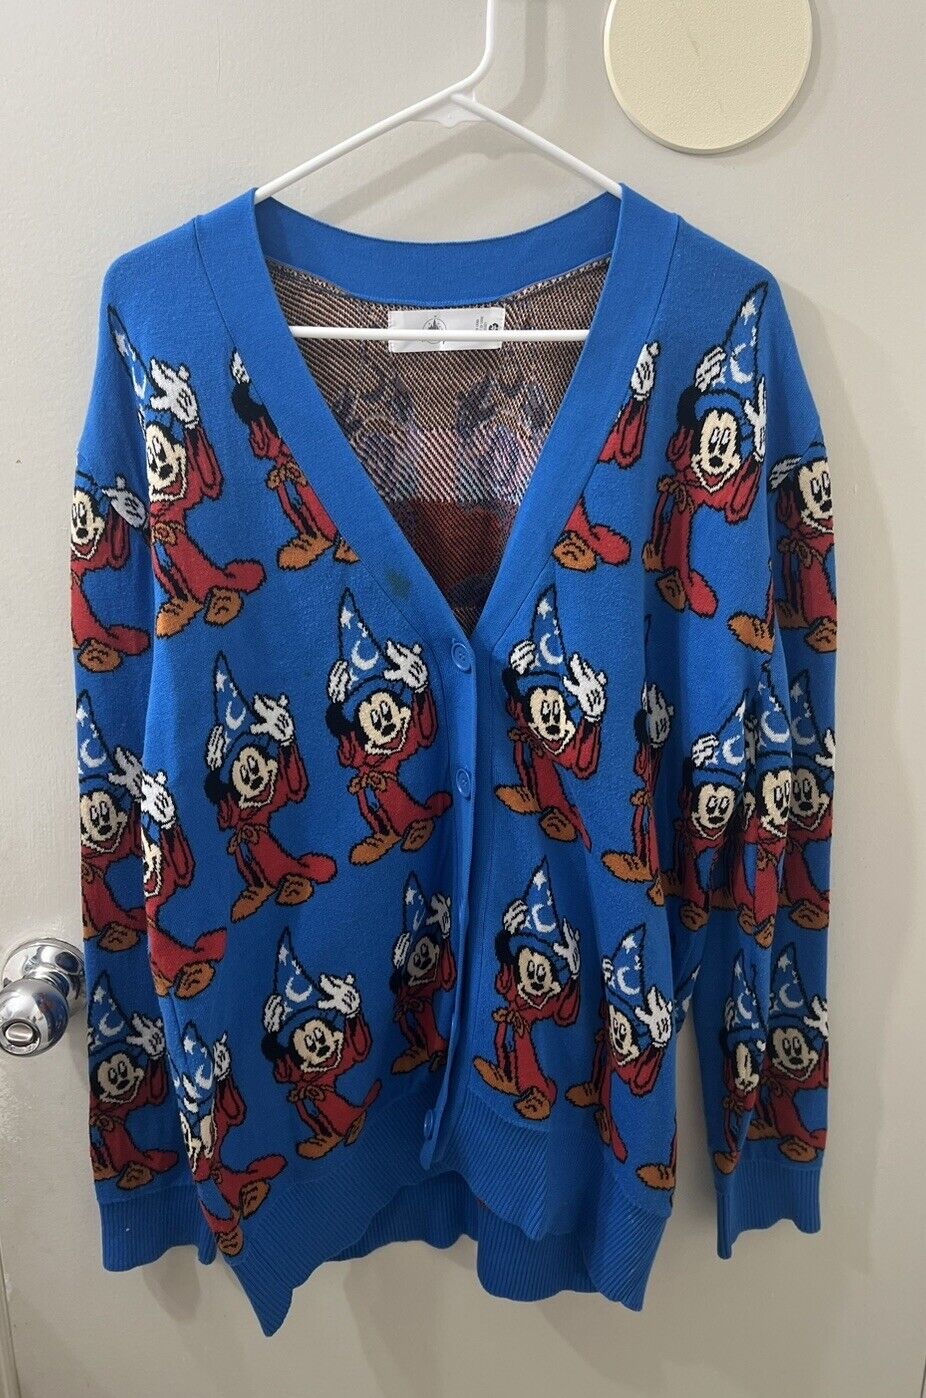 HTF Vintage Disney Sorcerer Mickey Cardigan Sweater Rare find Japan version